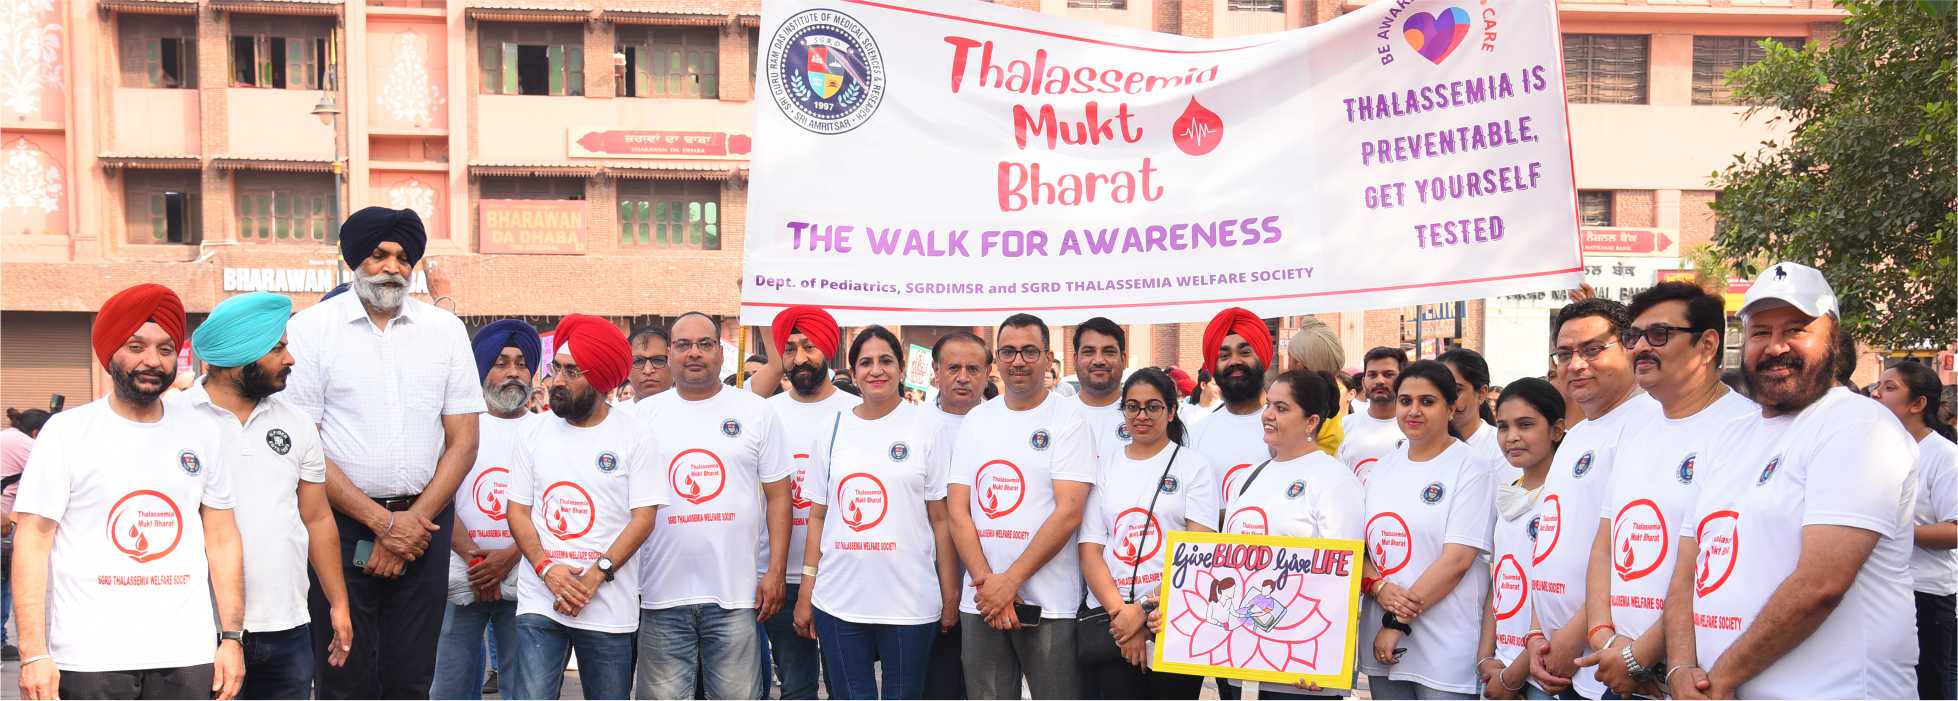 galimgs/Thalassemia Mukt Bharat Program Started/P - 23.jpg